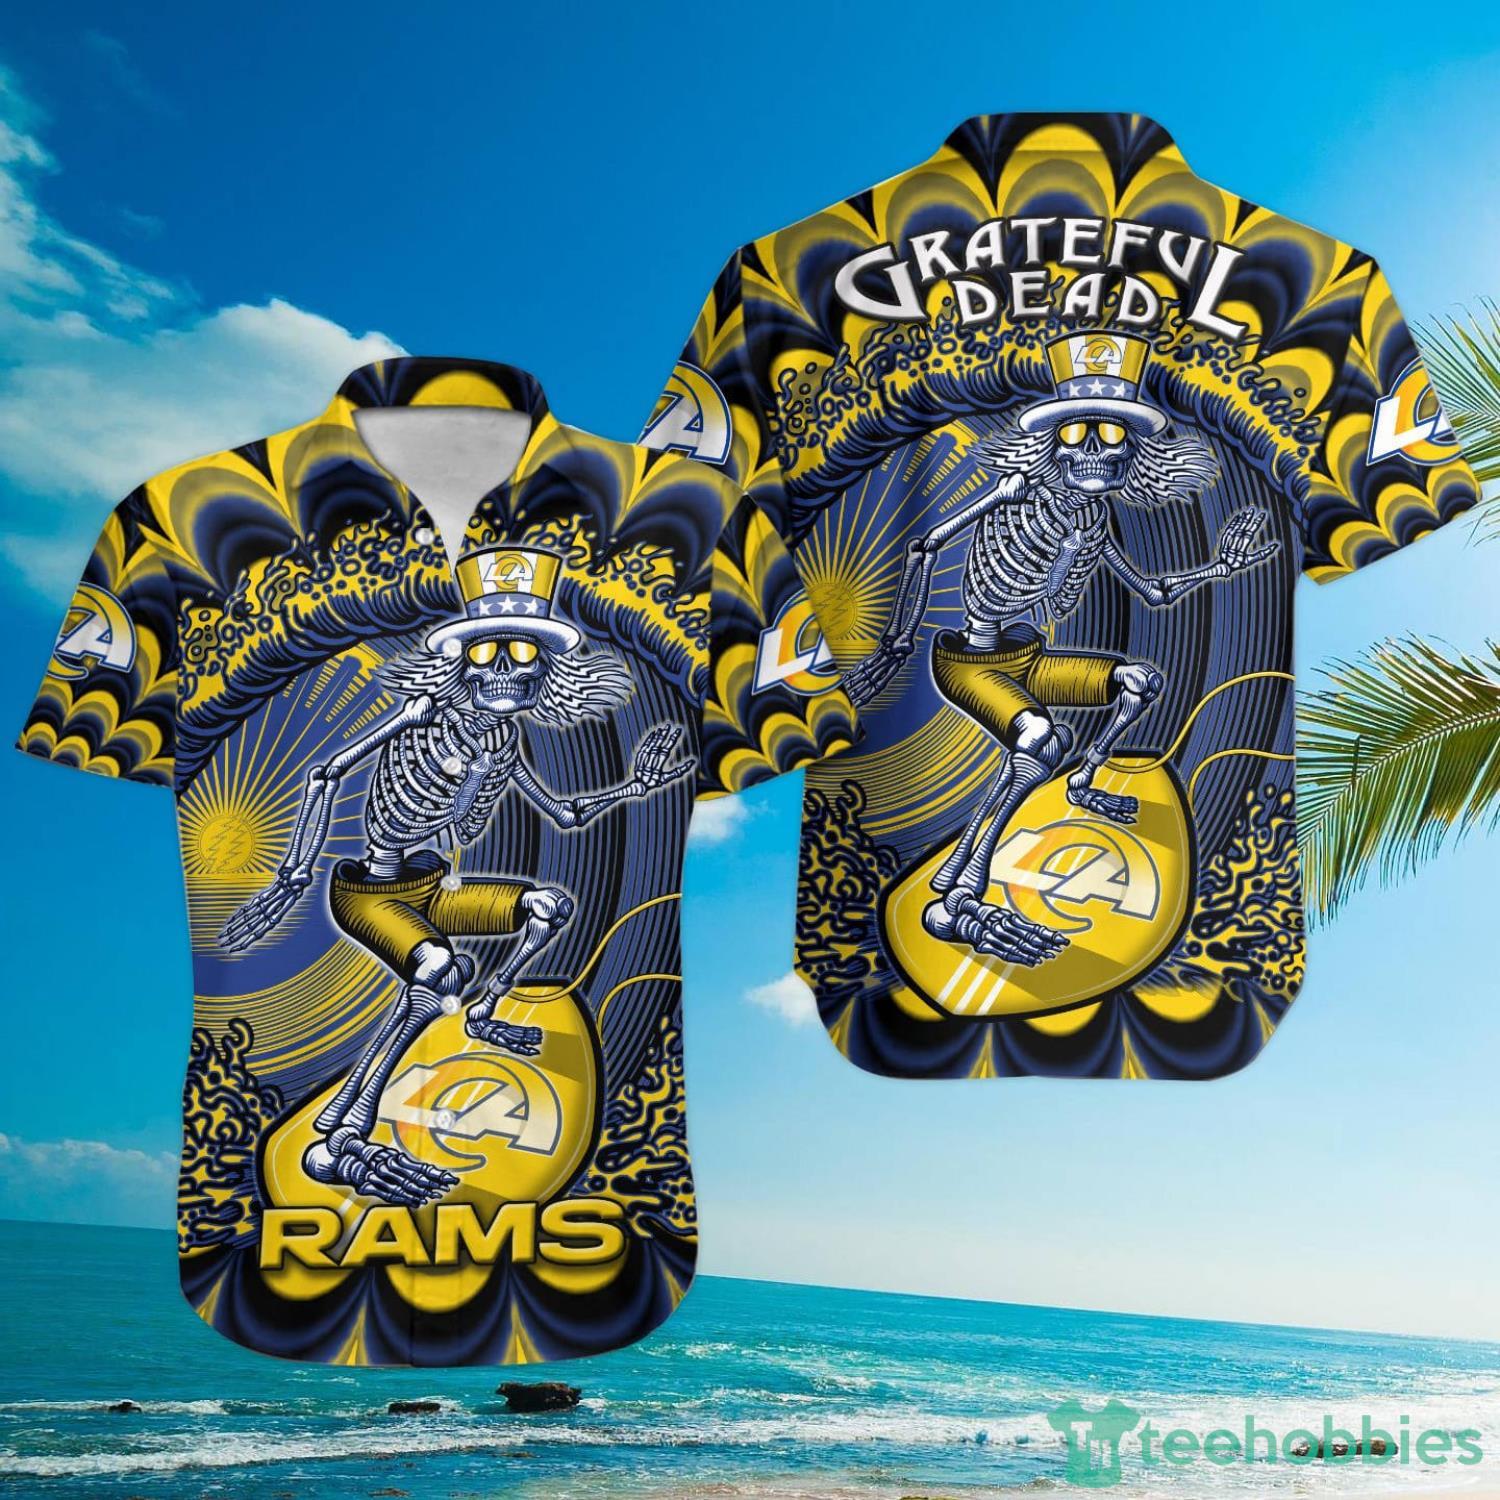 NFL Los Angeles Rams Aloha Tropical Hawaiian Shirt - Freedomdesign